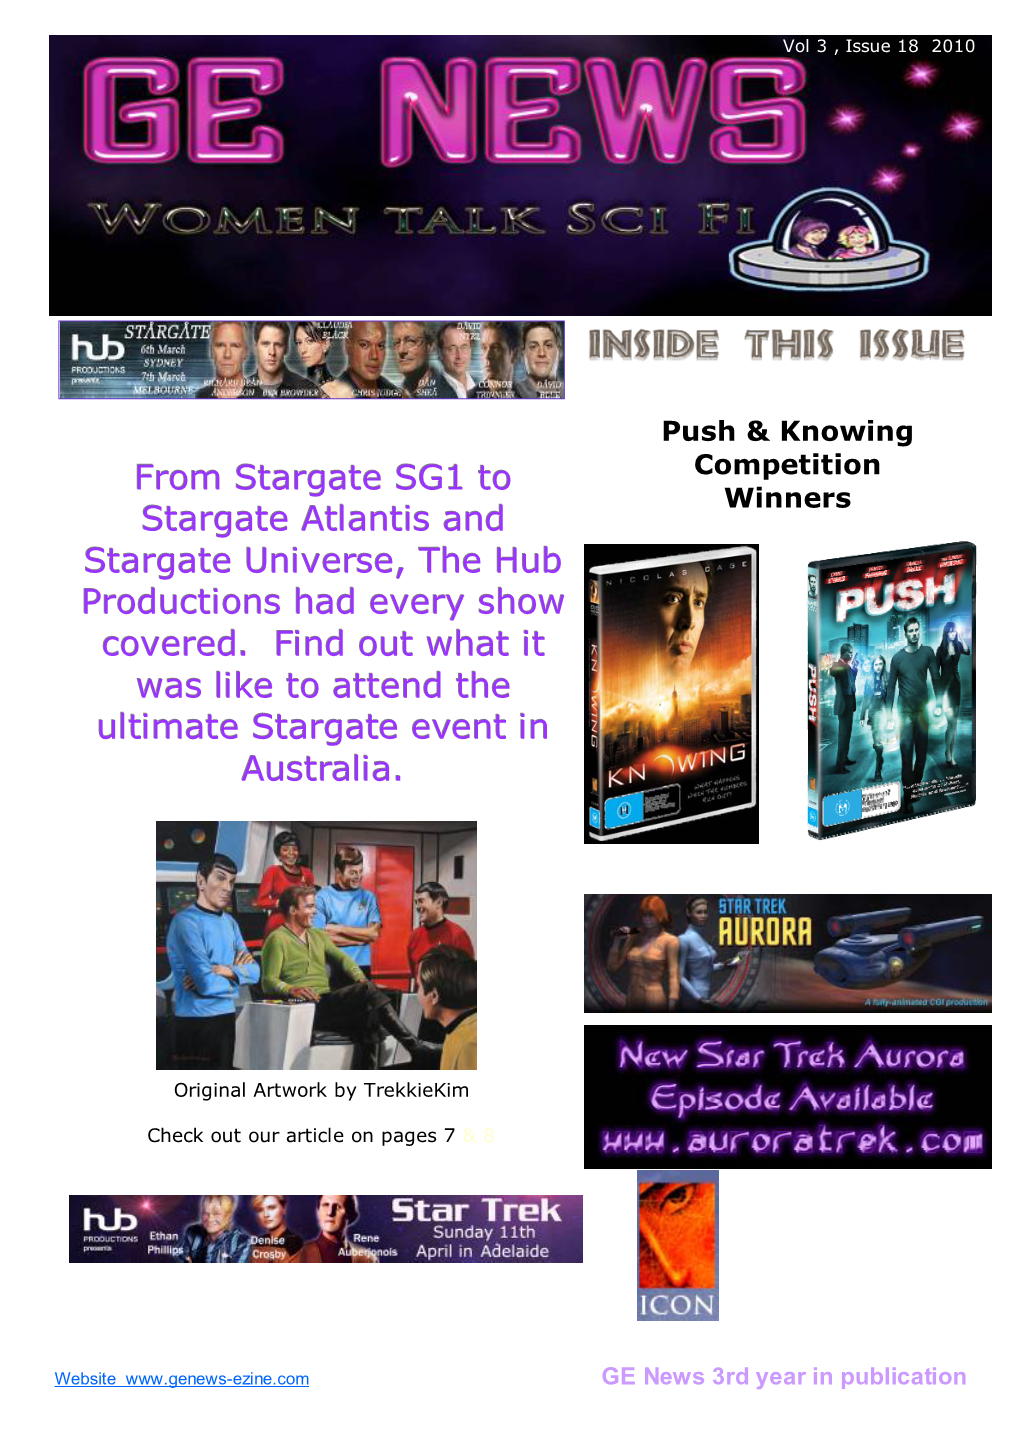 From Stargate SG1 to Stargate Atlantis and Stargate Universe, the Hub